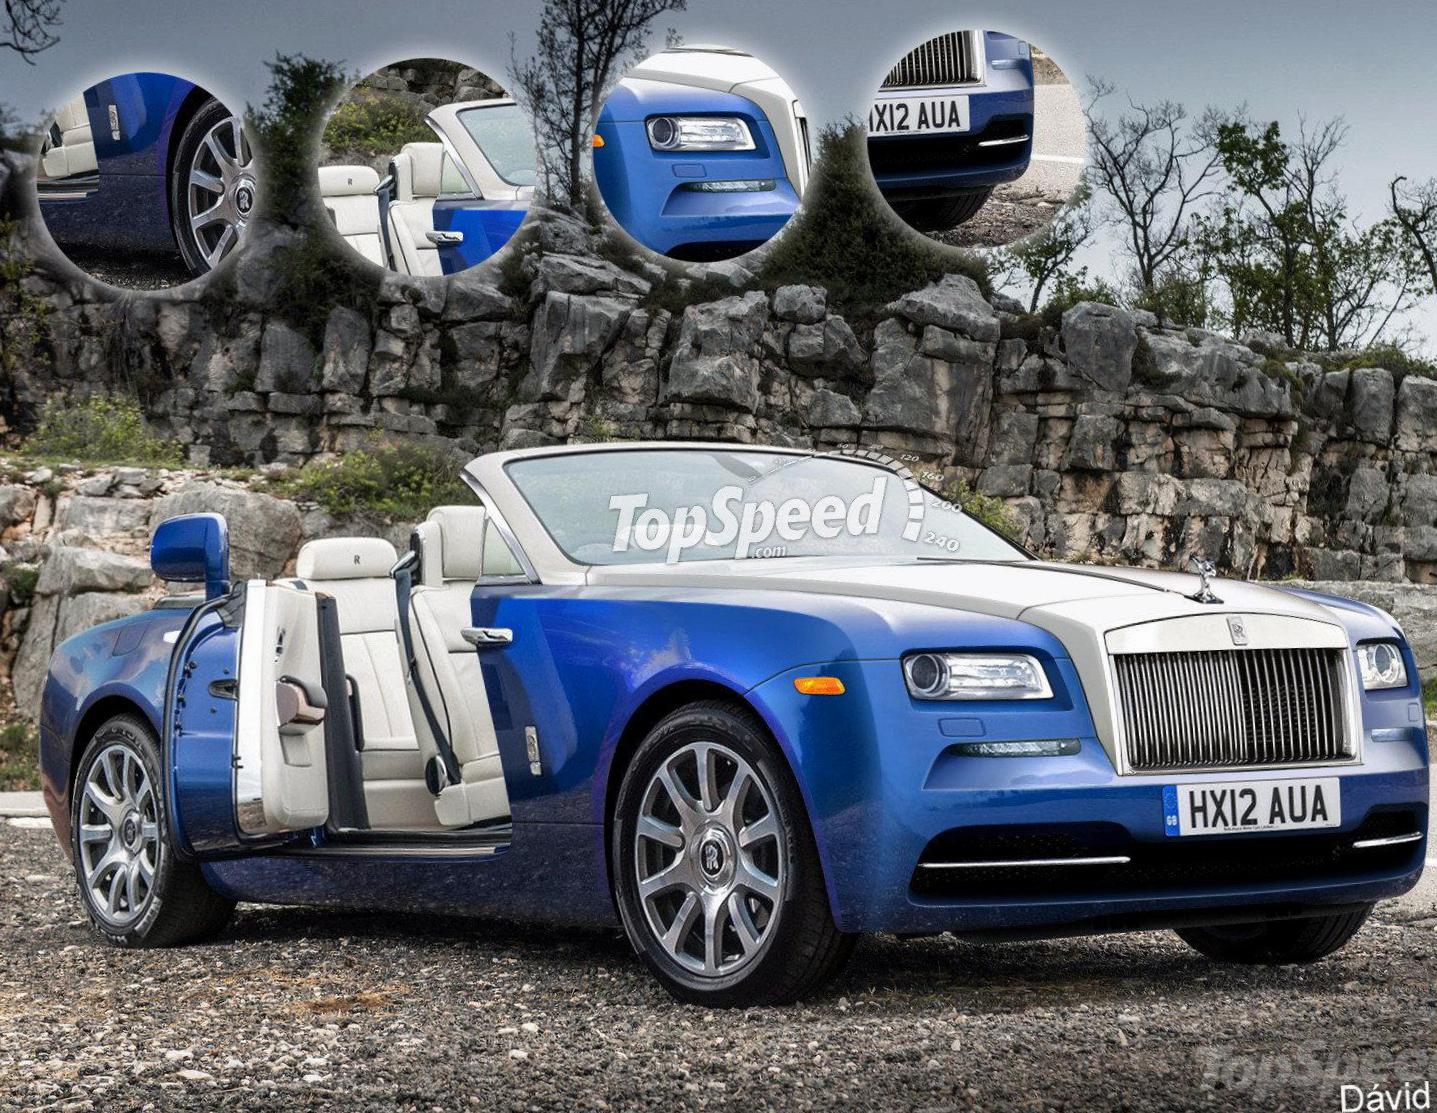 Dawn Rolls-Royce prices 2013